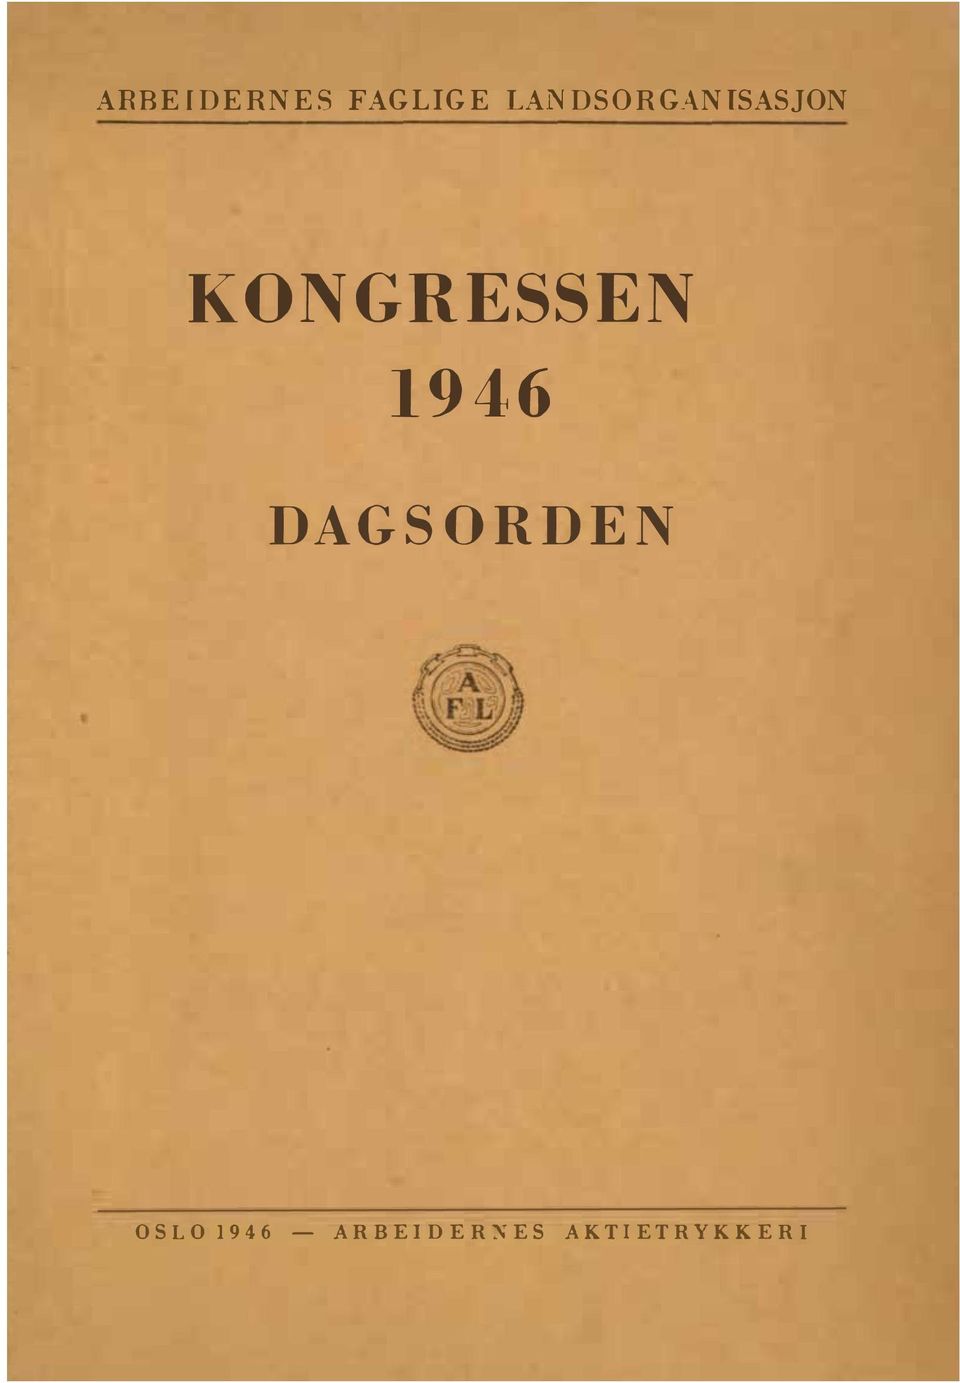 KONGRESSEN 1946 DAGSORDEN